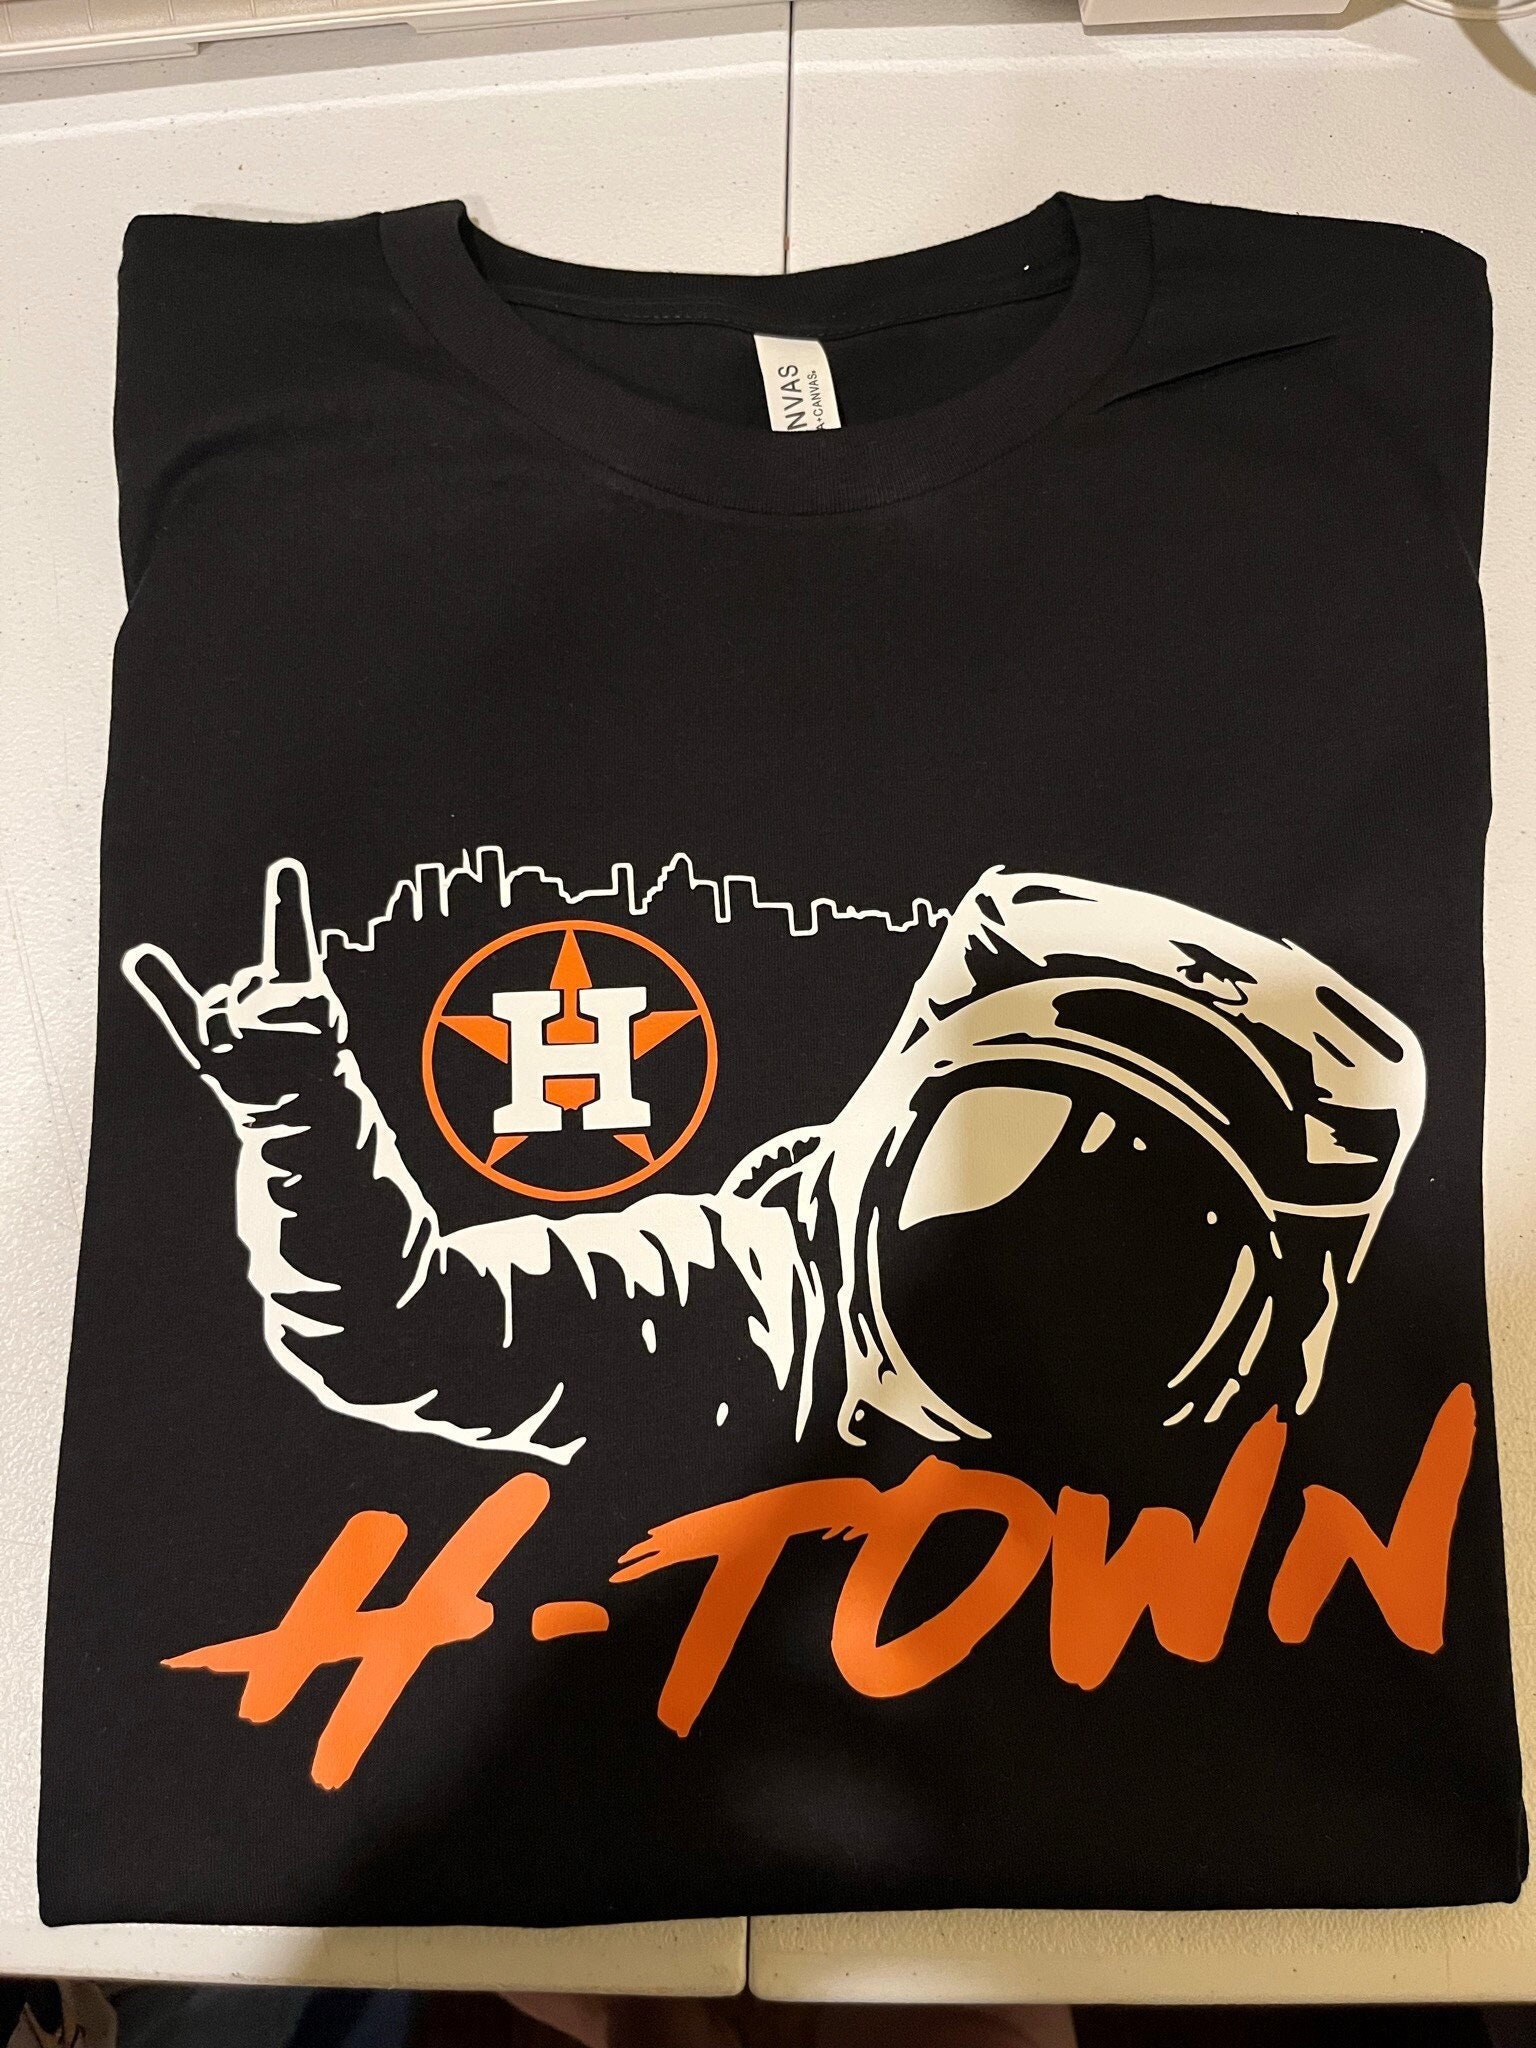 Houston Astros Swangin' Aand Bangin' H-Town shirt, hoodie, sweatshirt and  tank top